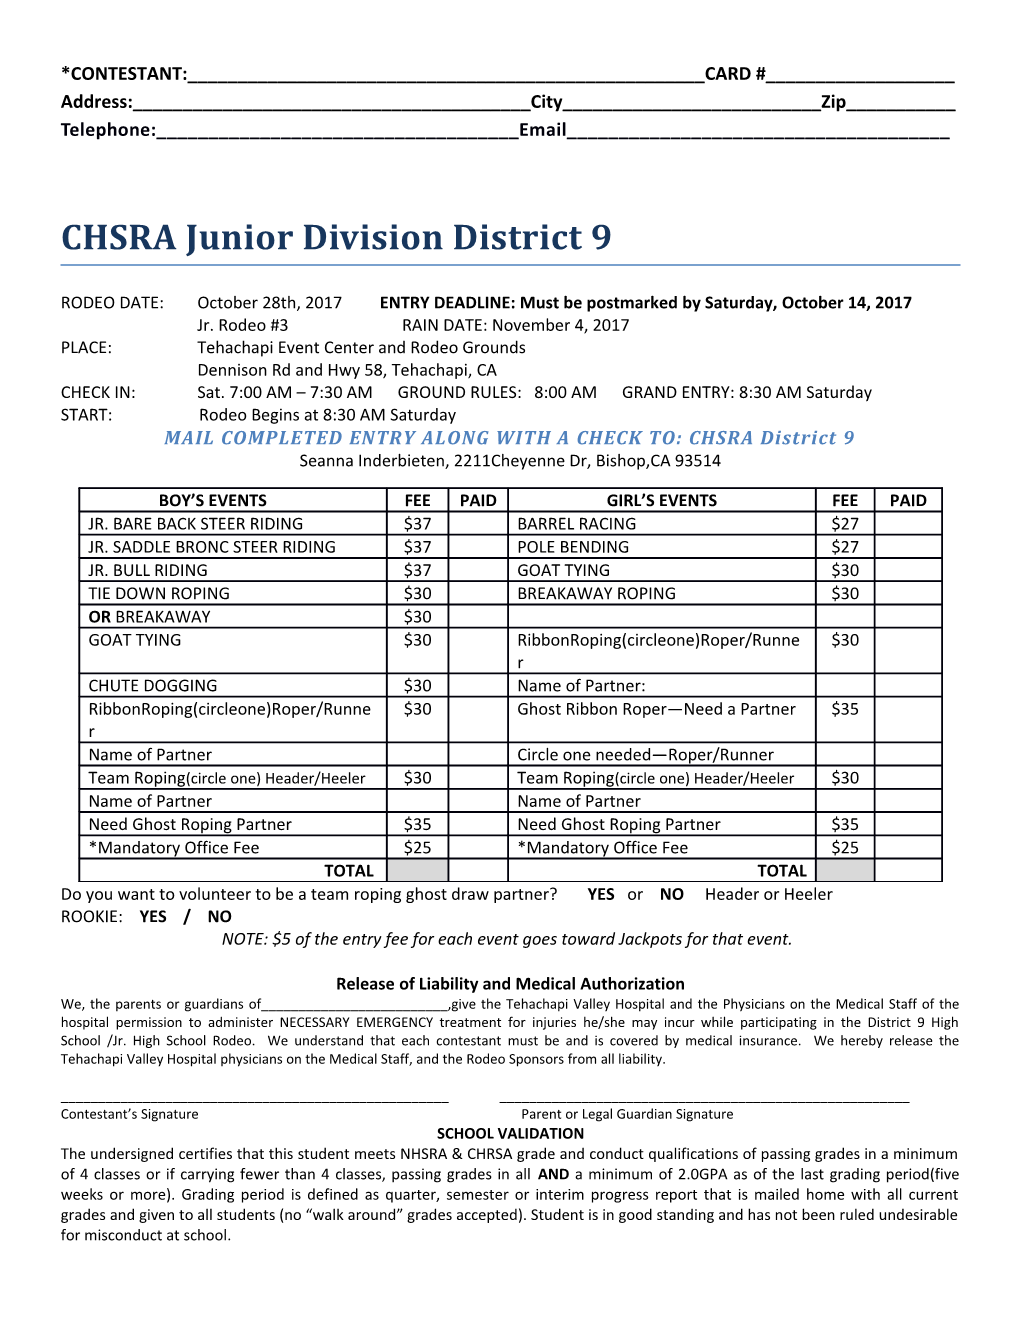 CHSRA Junior Division District 9